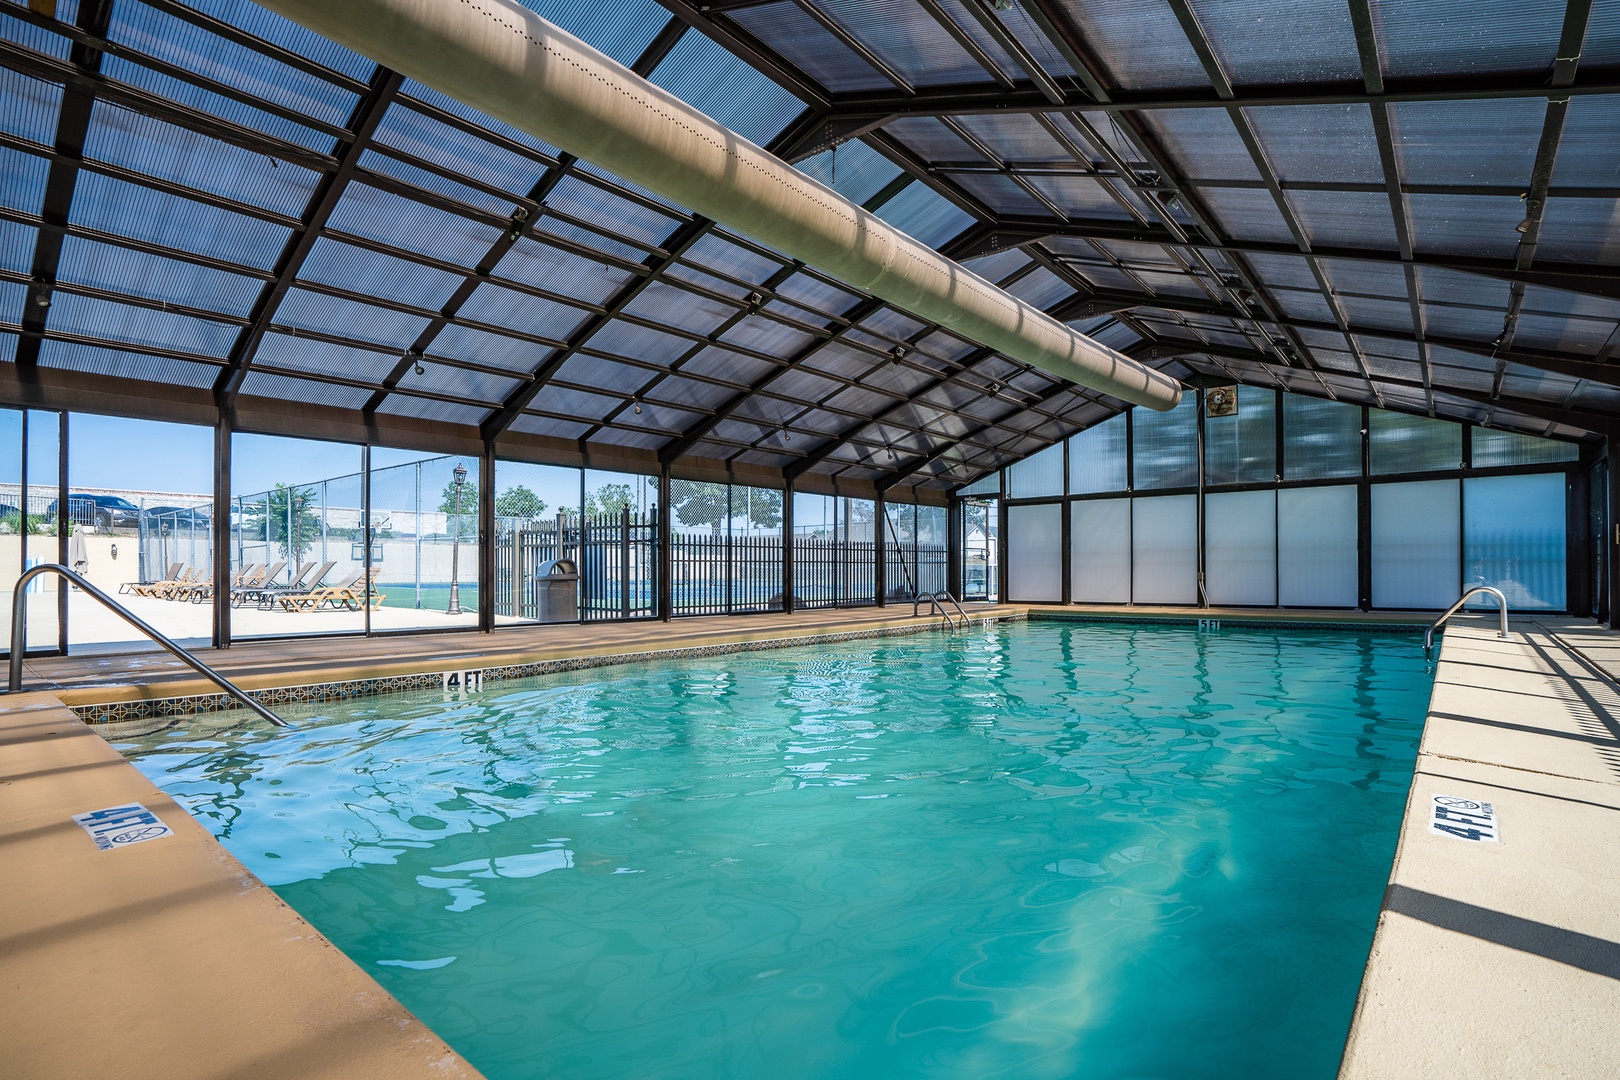 Heated indoor pool open year around!